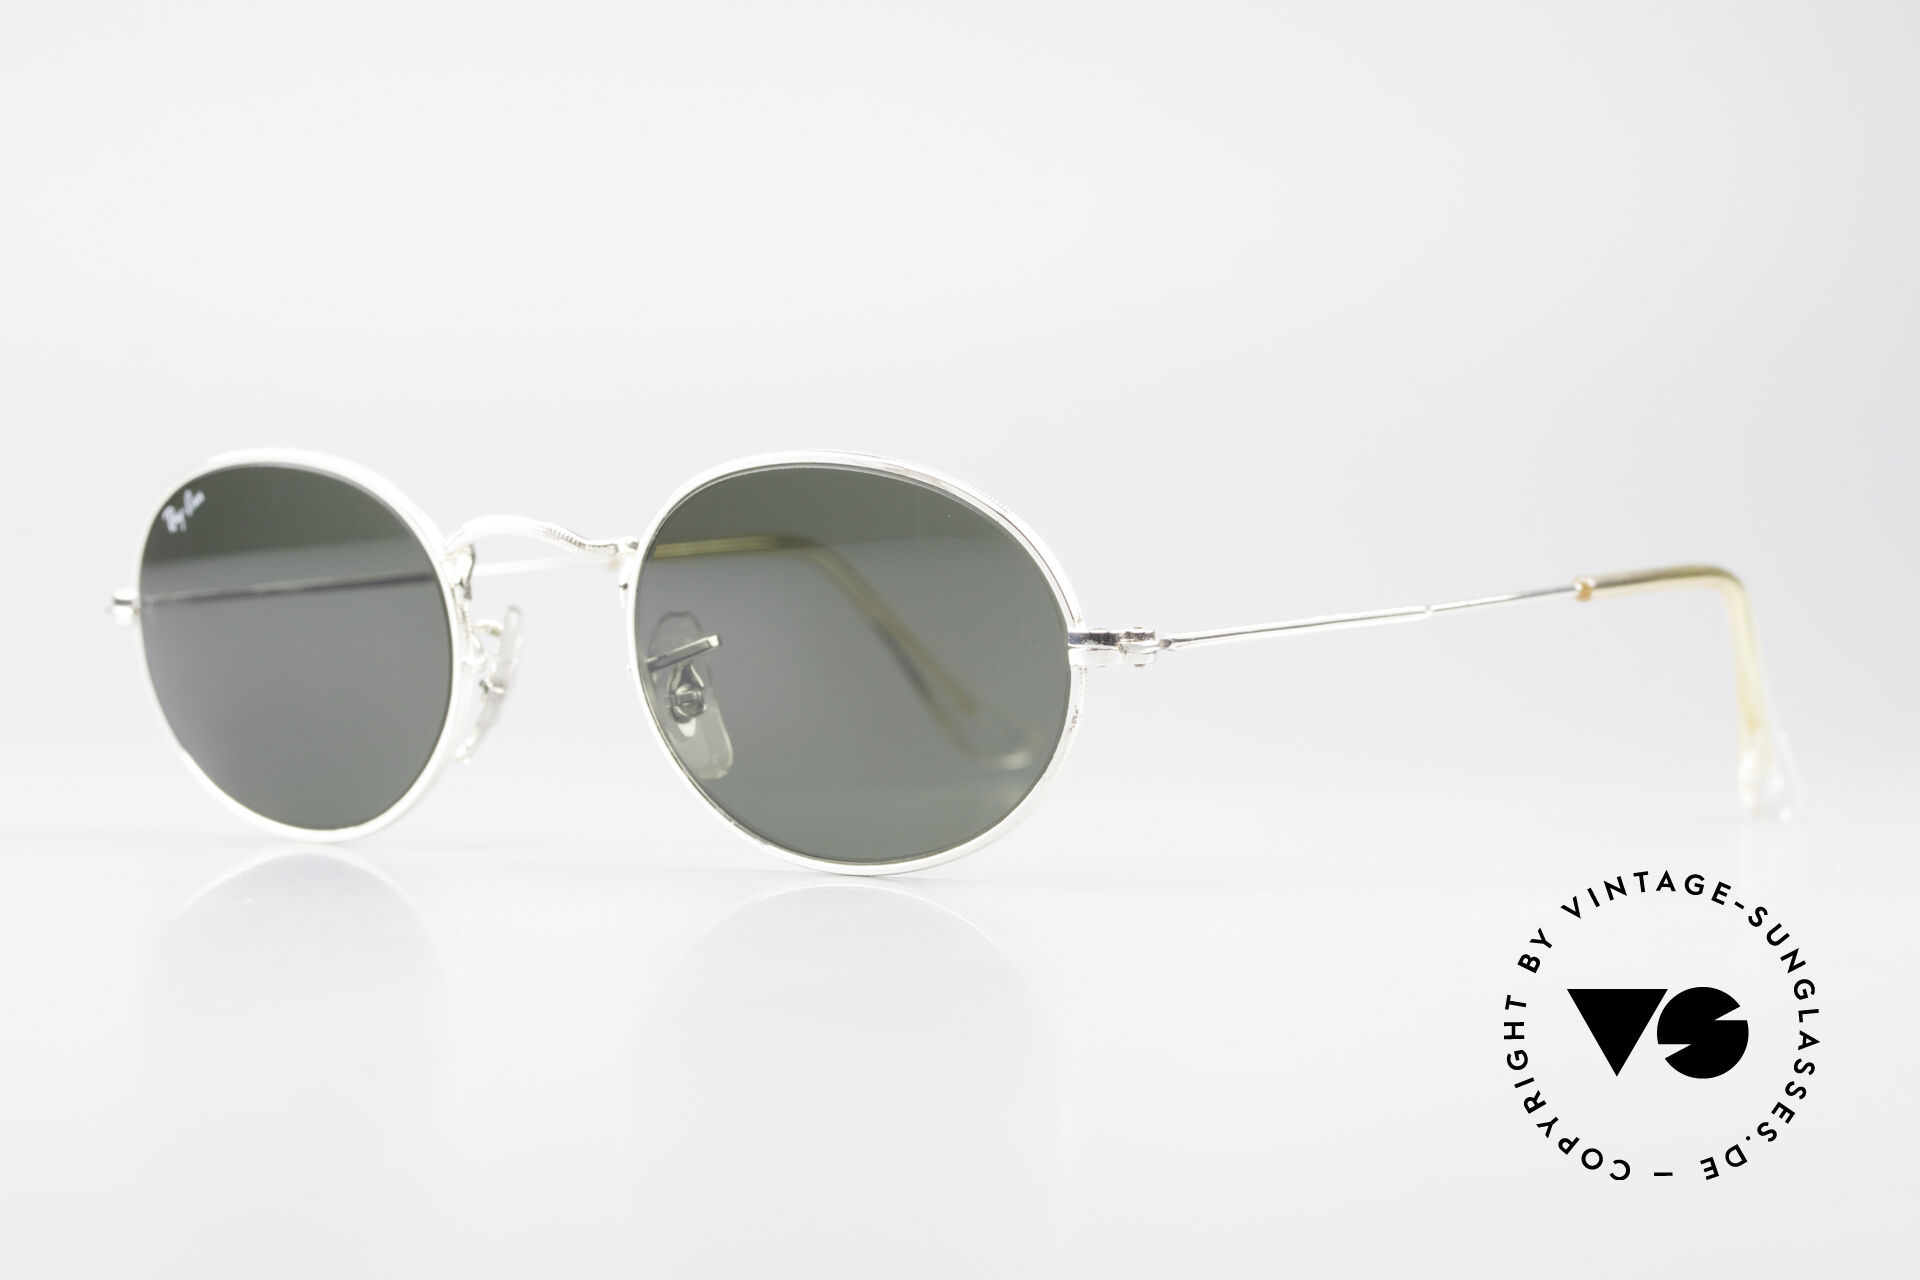 Sunglasses Ray Ban Classic Style I Old Oval B&L USA Sunglasses